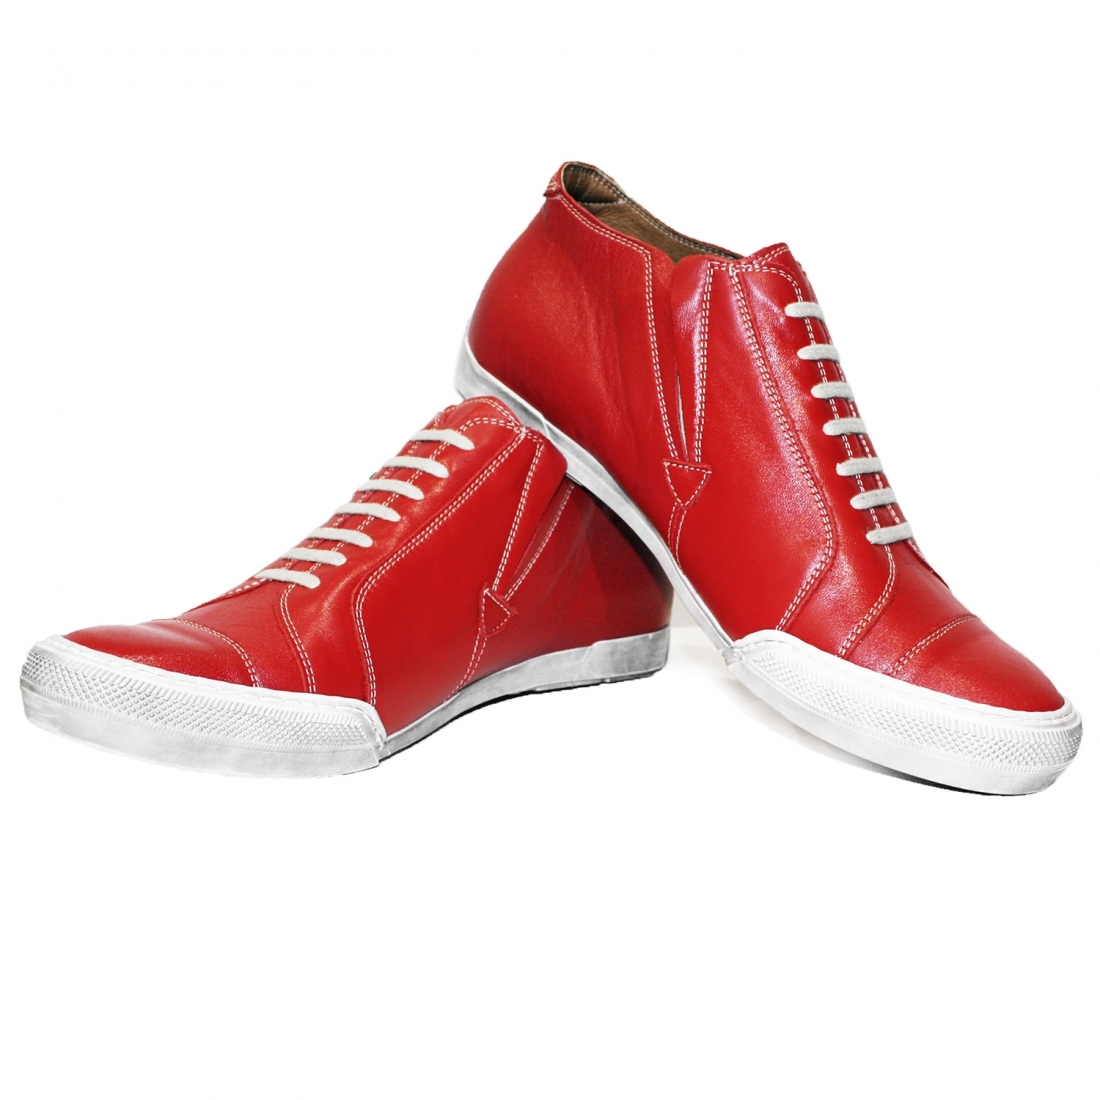 Modello Rednoise - スニーカー - Handmade Colorful Italian Leather Shoes